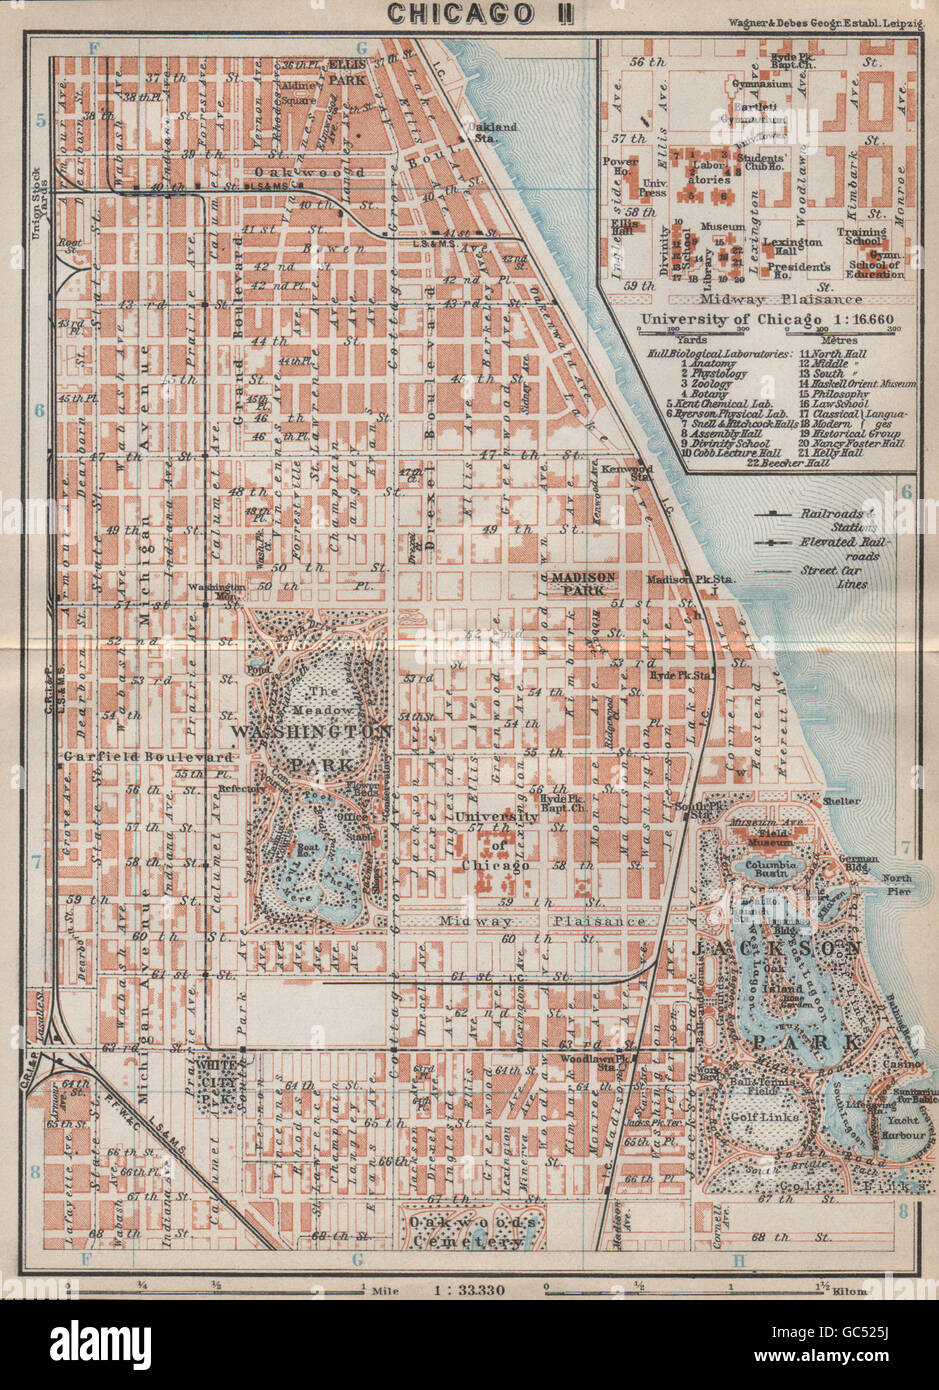 CHICAGO city plan. South Side Woodlawn Washington/Jackson/Hyde Park, 1909 map Stock Photo